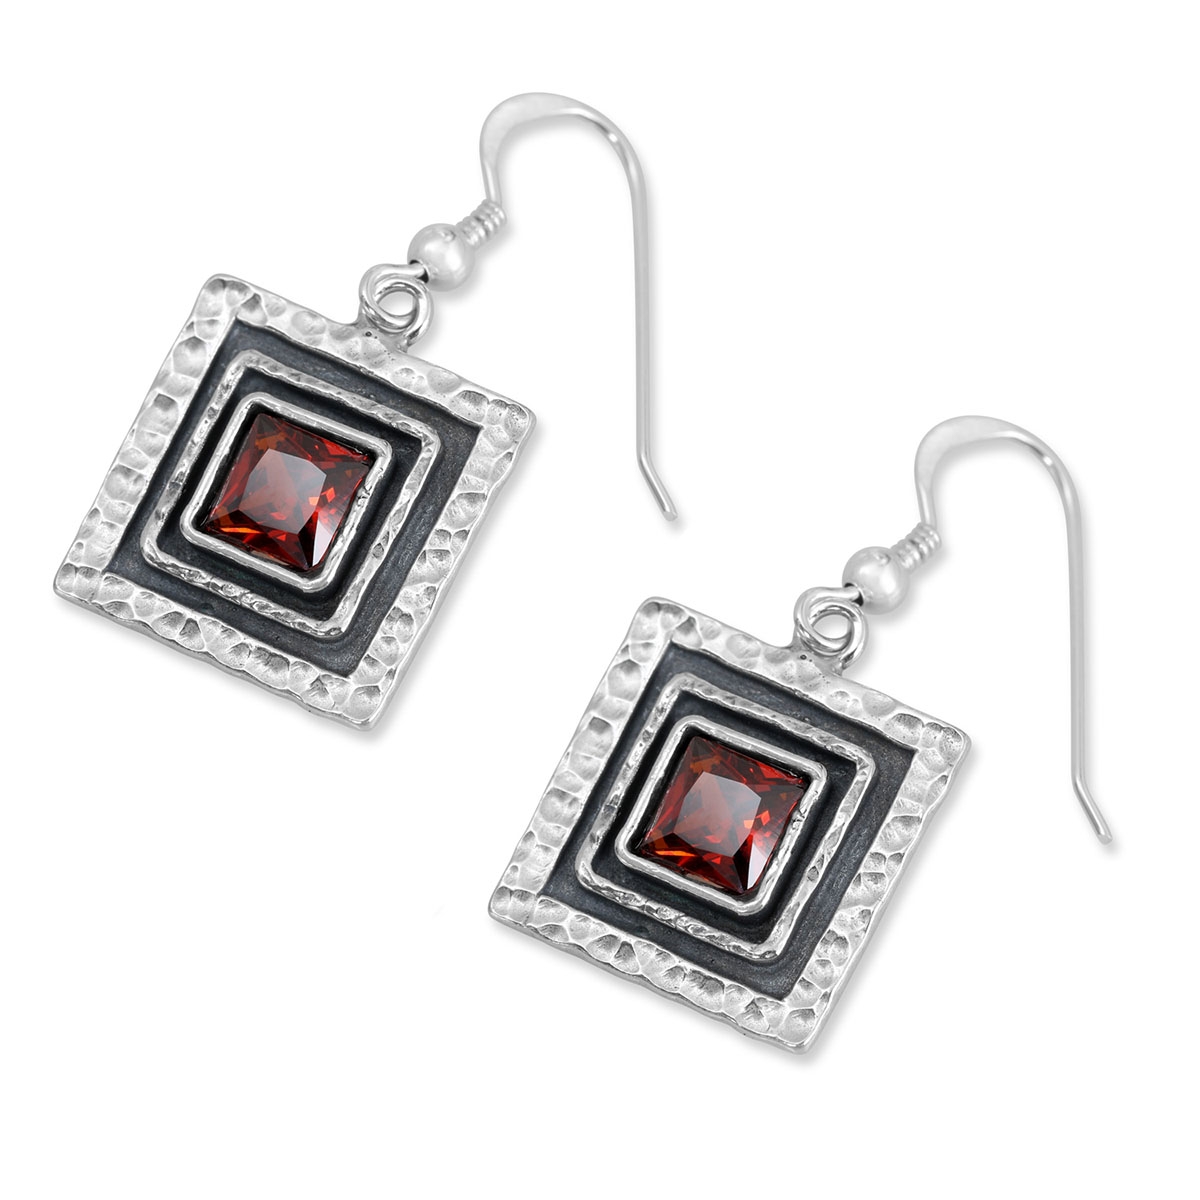 Rafael Jewelry Hammered Square Sterling Silver Earrings - Garnet - 1